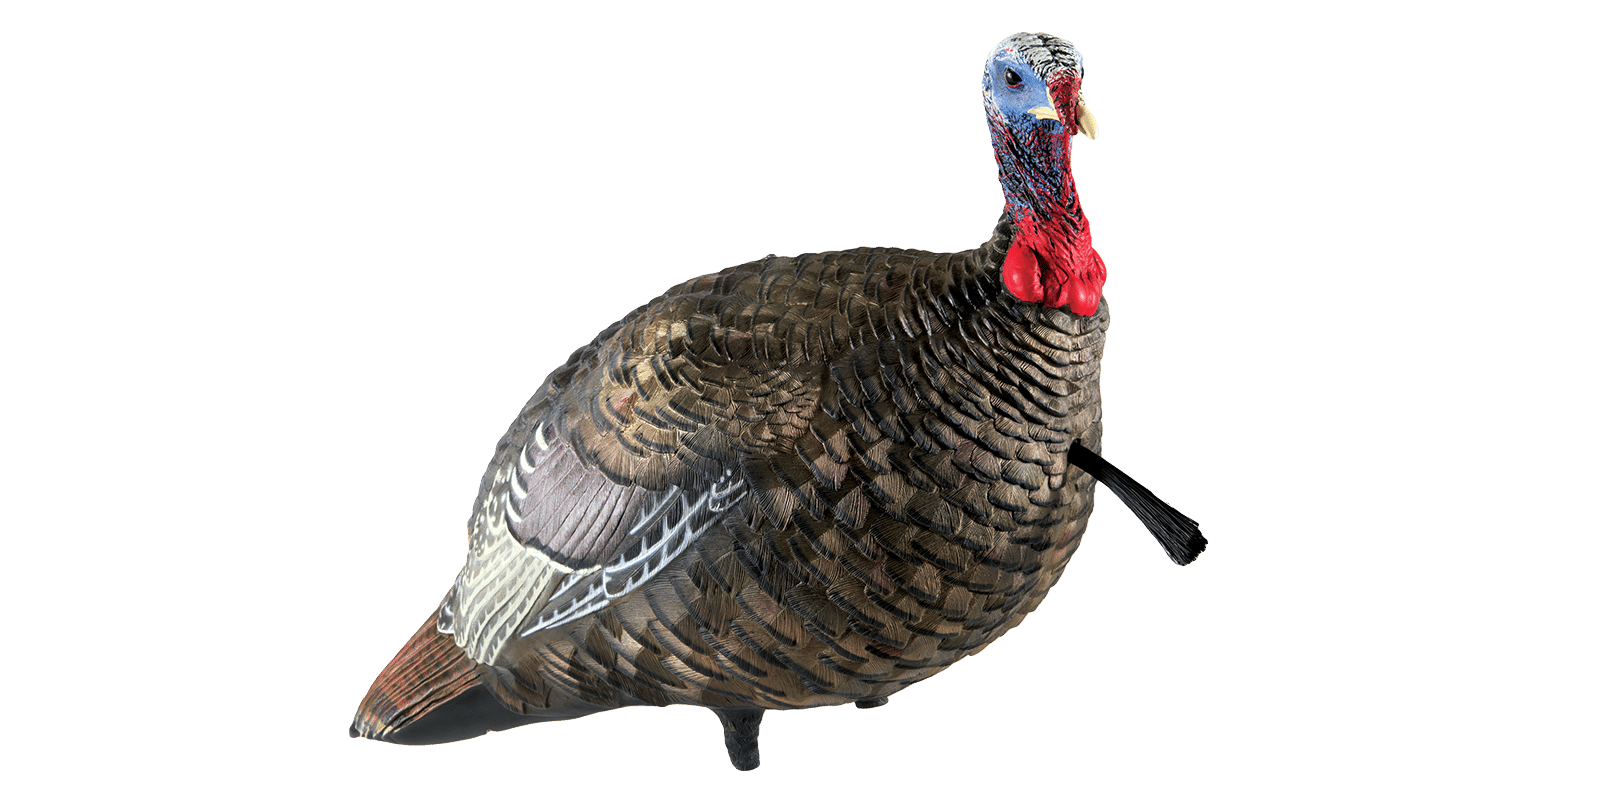 The AvianX Jake: Gear for Western Turkey Hunting